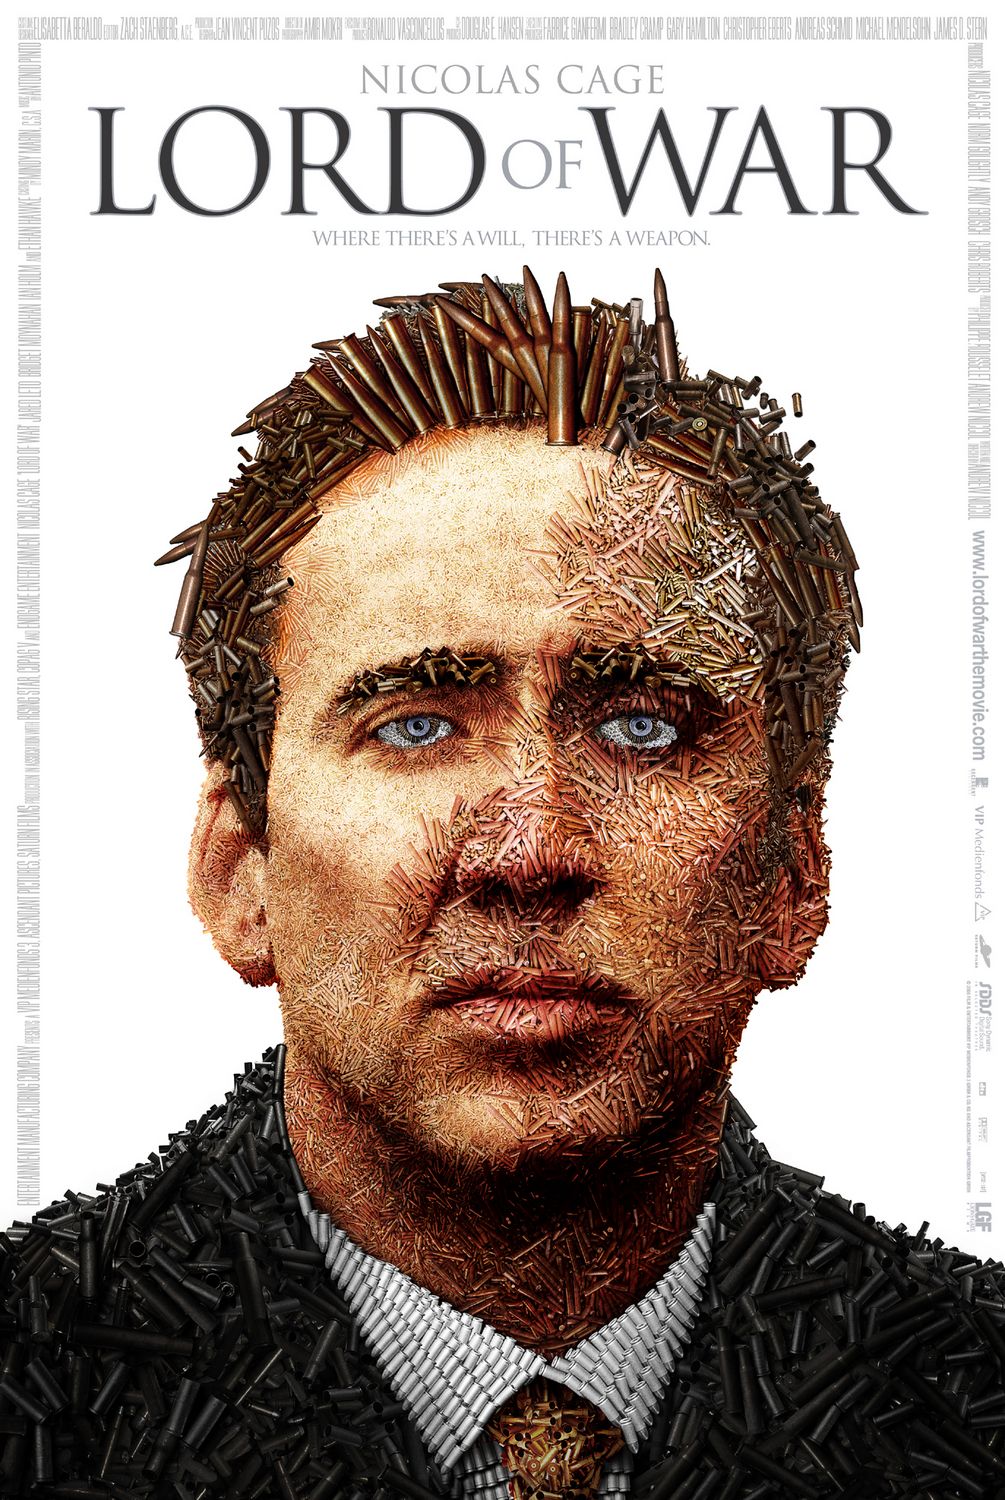 Lord of War (2005) นักฆ่าหน้านักบุญ Nicolas Cage